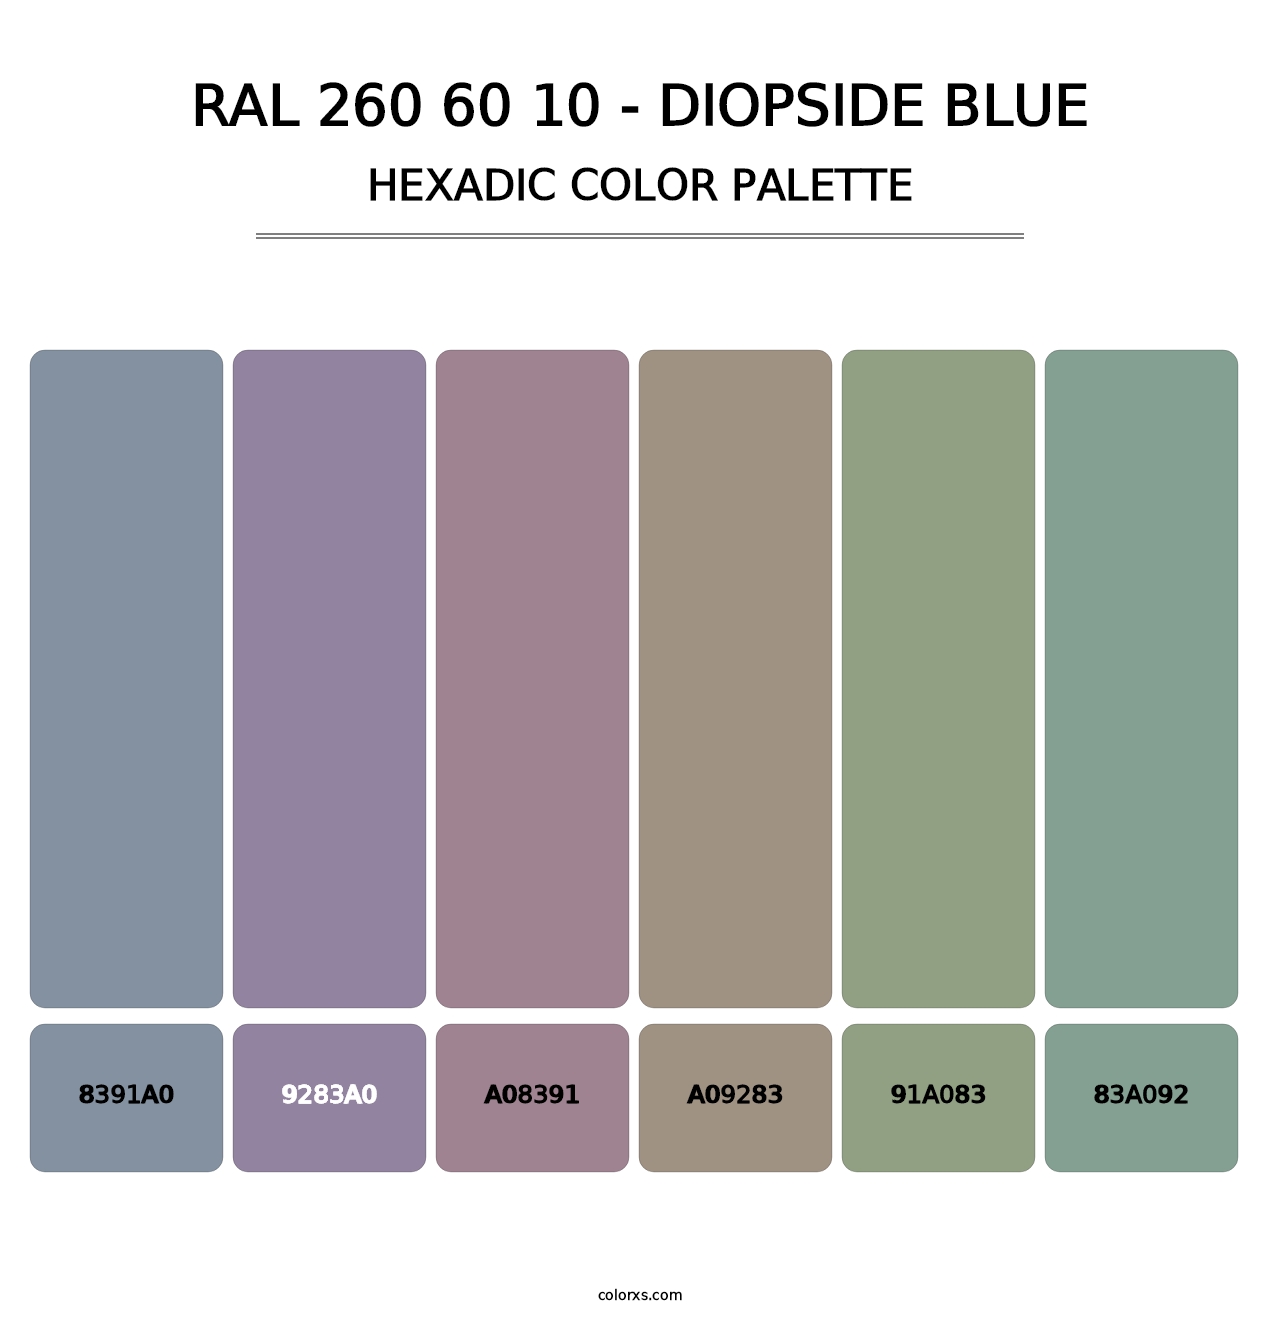 RAL 260 60 10 - Diopside Blue - Hexadic Color Palette